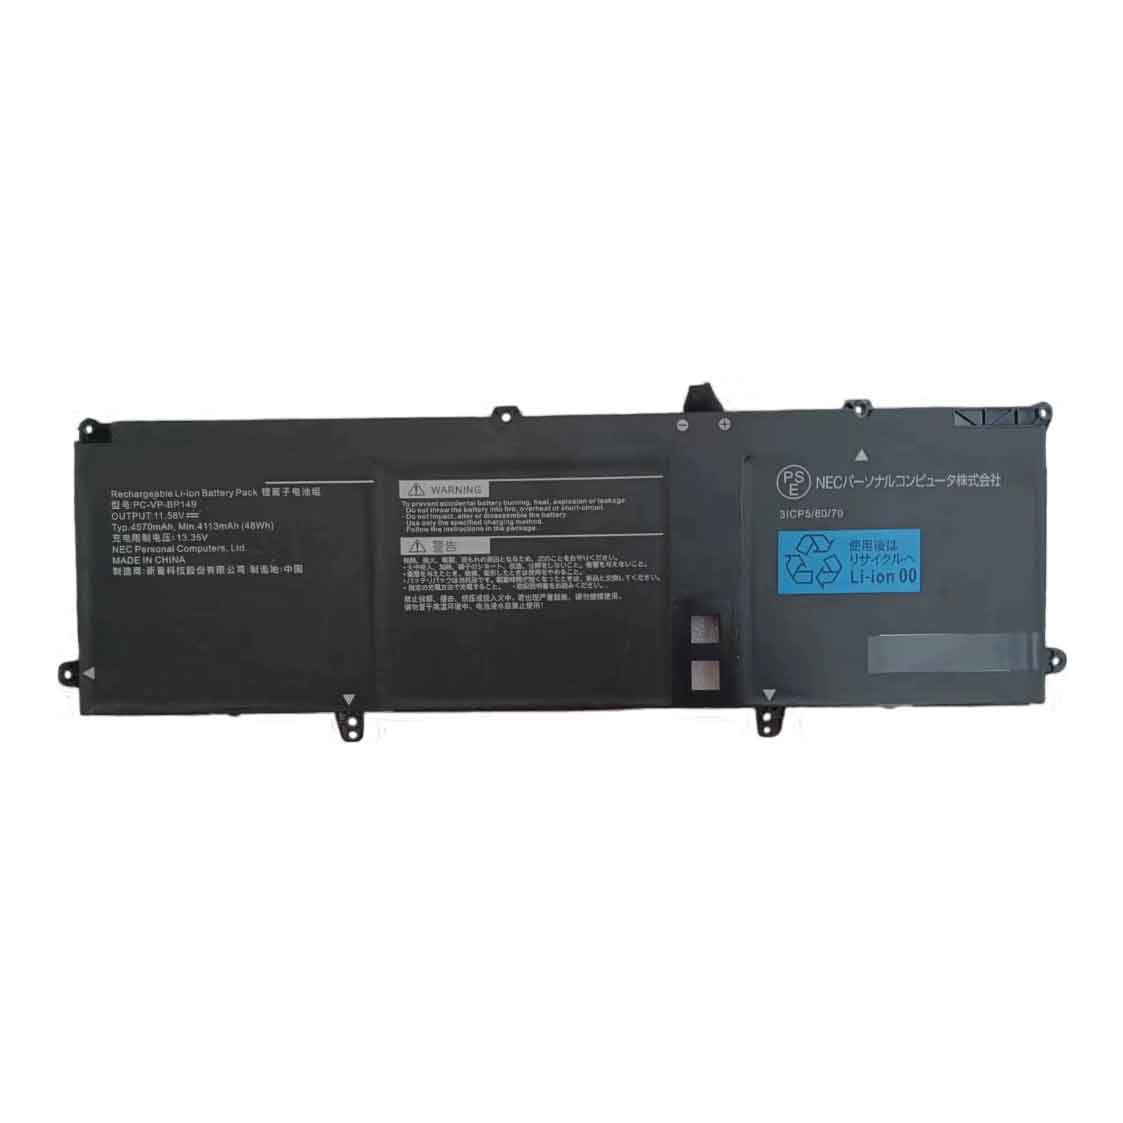 SDI-21CP4/106/nec-PC-VP-BP149バッテリー交換